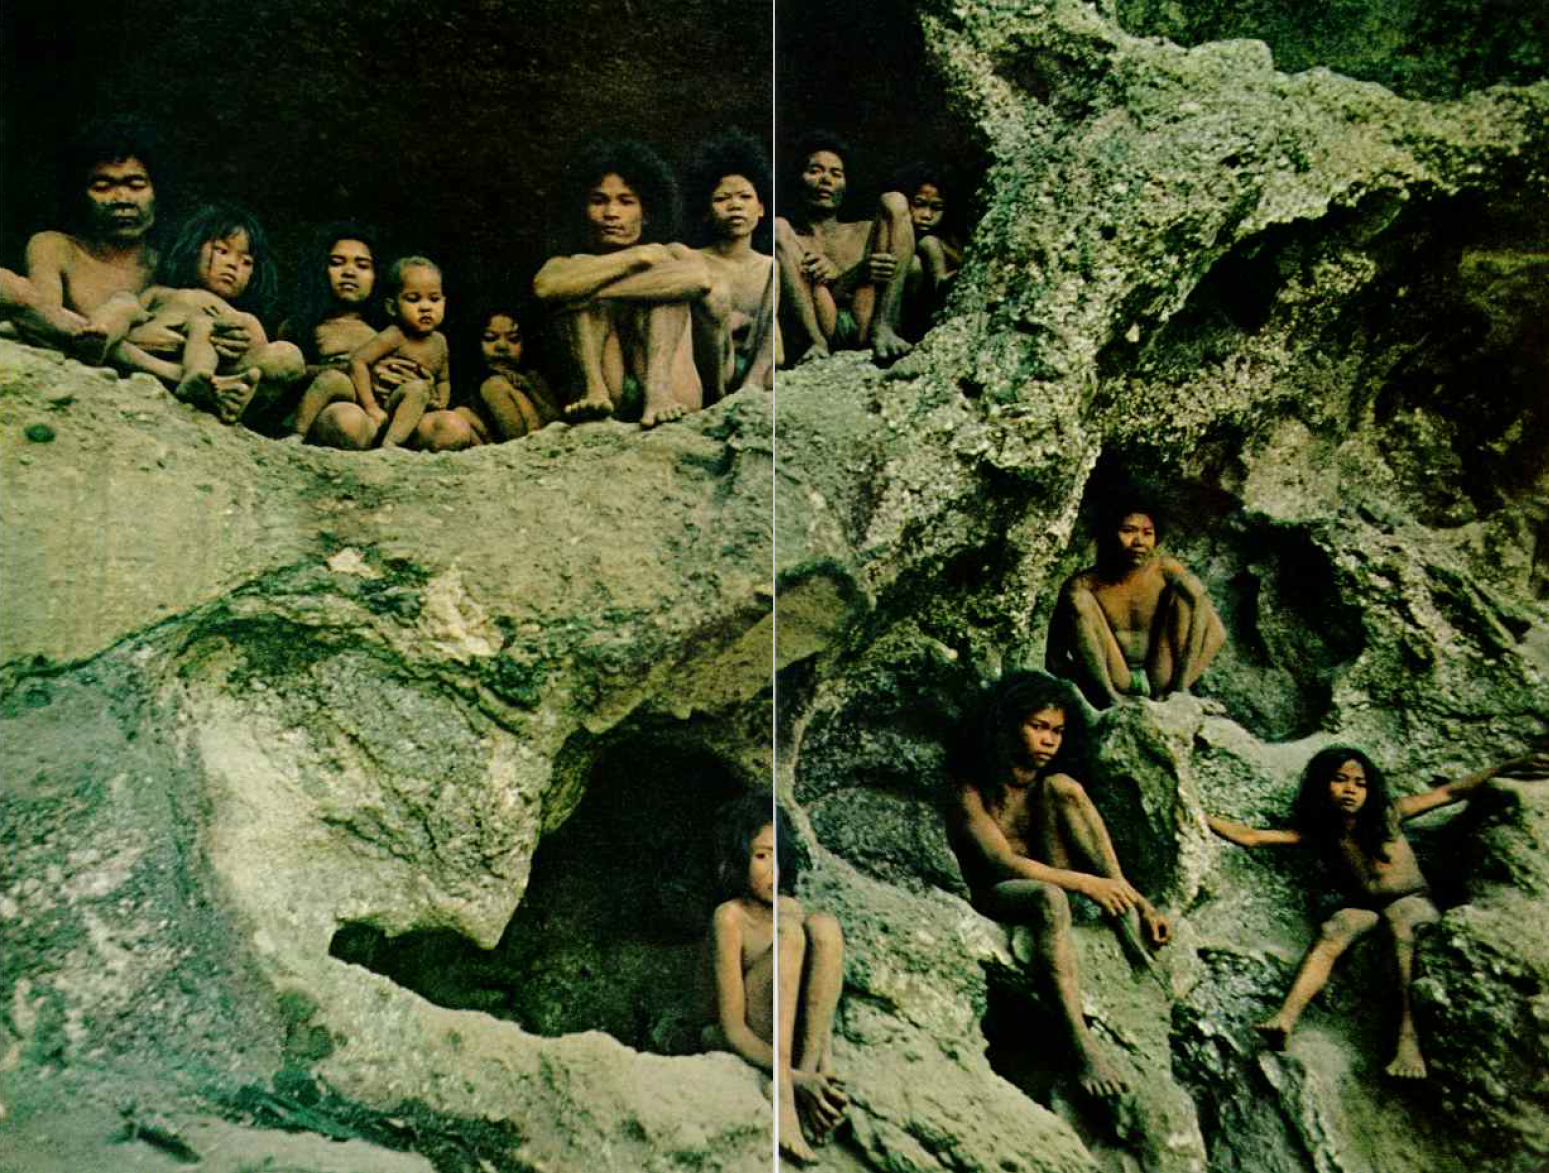 Tasadays, 1972 | National Geographic